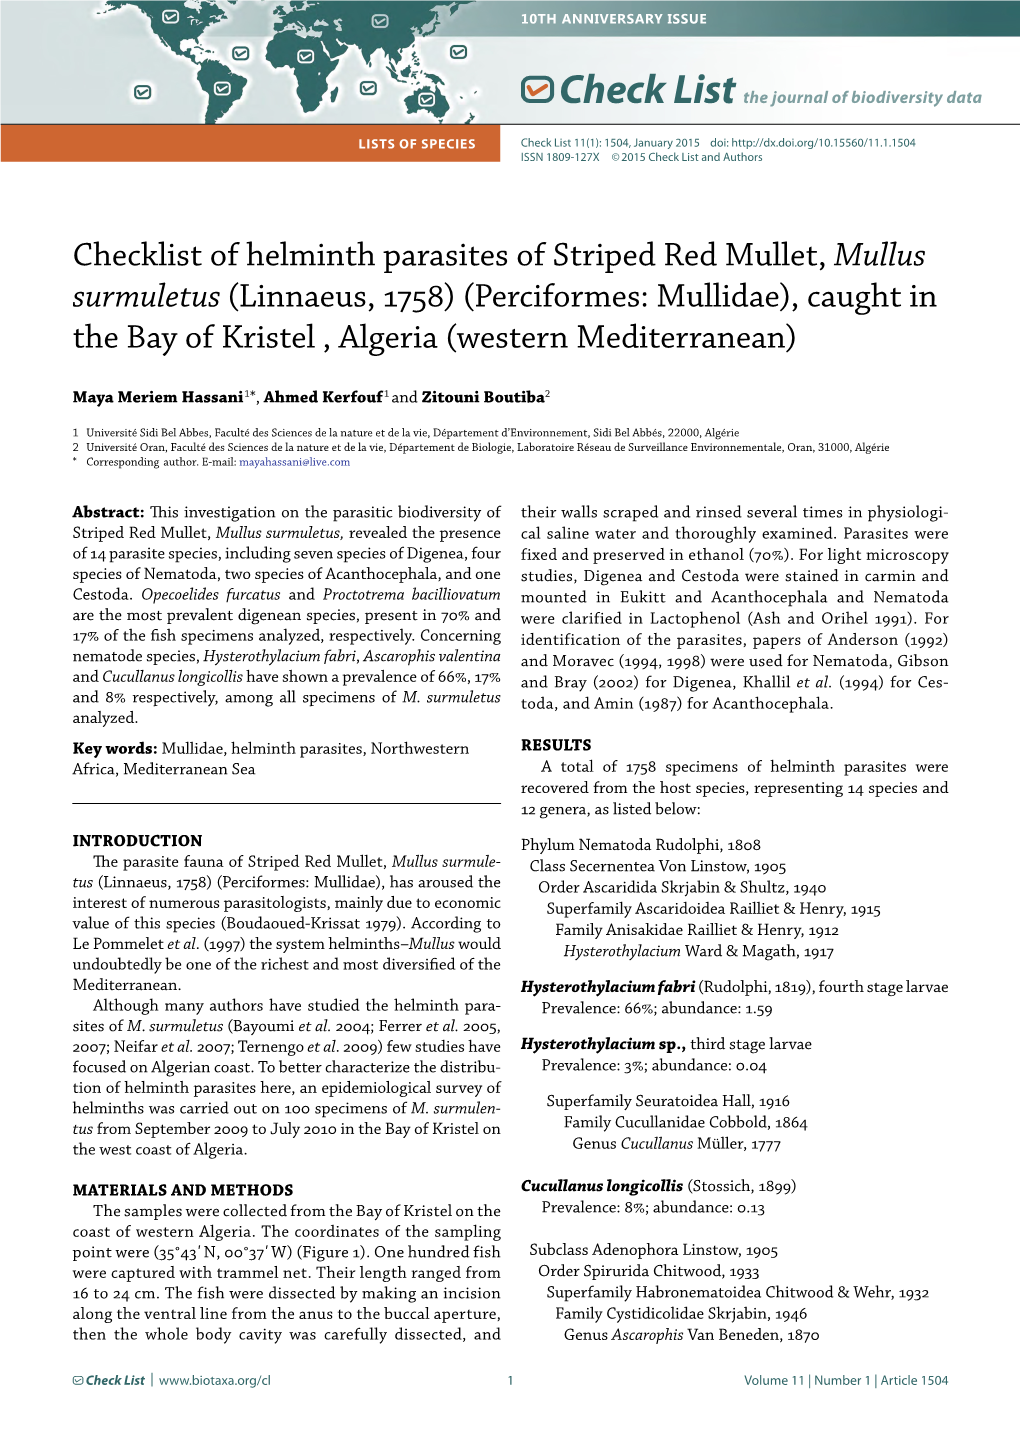 Checklist of Helminth Parasites of Striped Red Mullet, Mullus Surmuletus